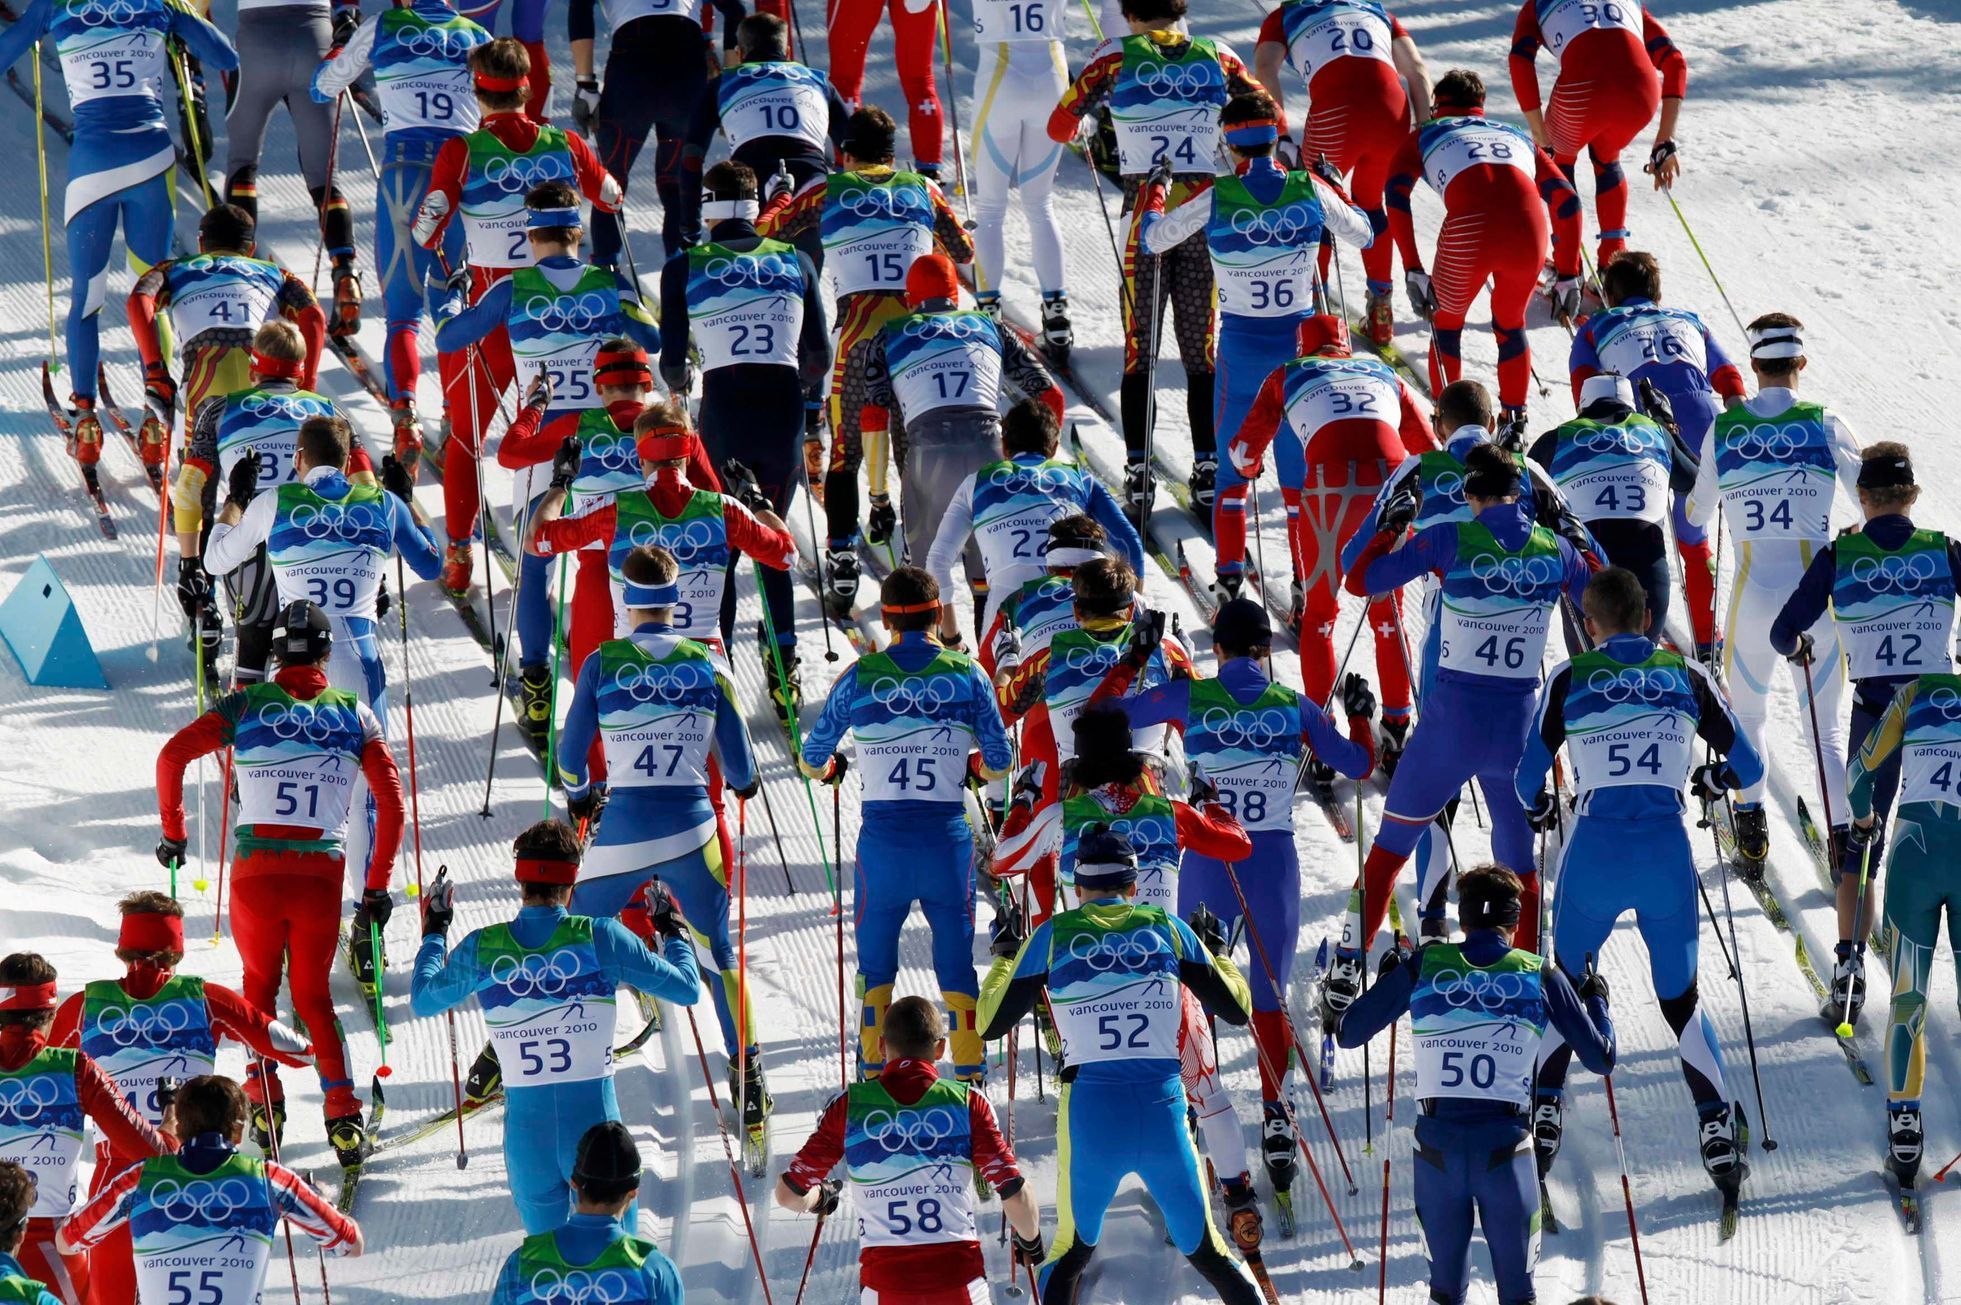 Peloton běžců na lyžích